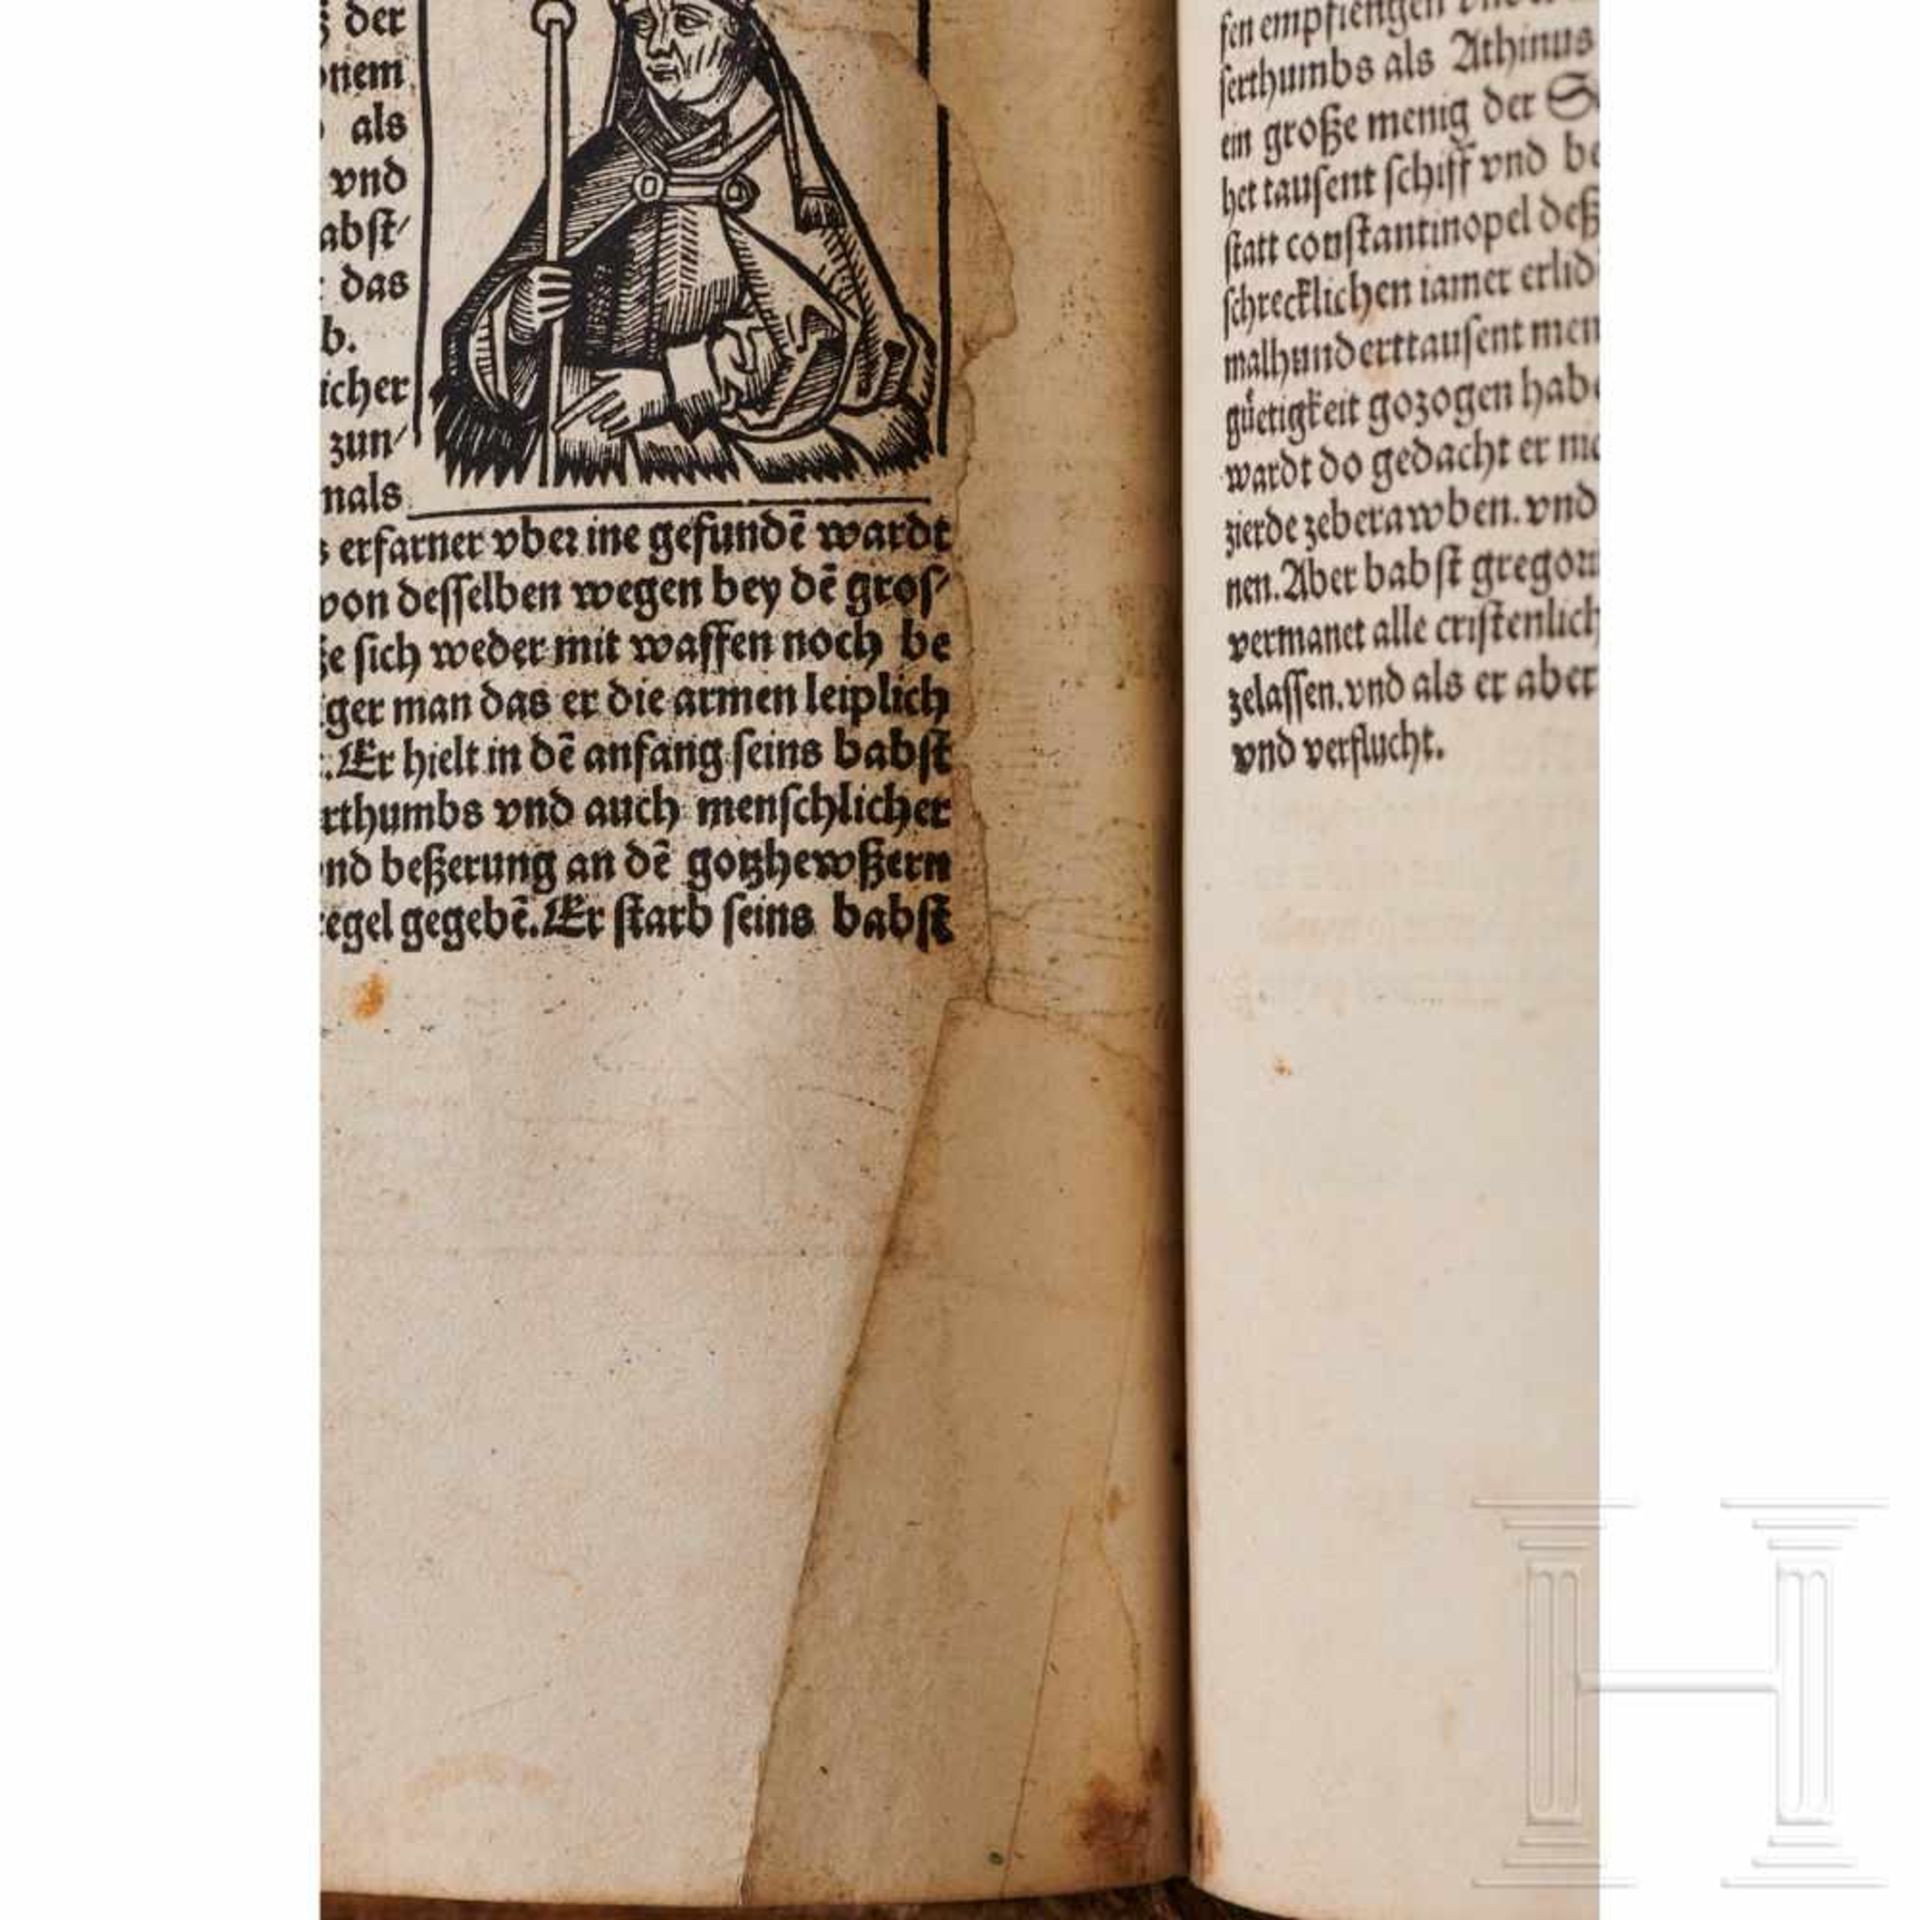 Hartmann Schedel, Das Buch der Chroniken, Nürnberg, A. Koberger, 1493 - Bild 51 aus 51